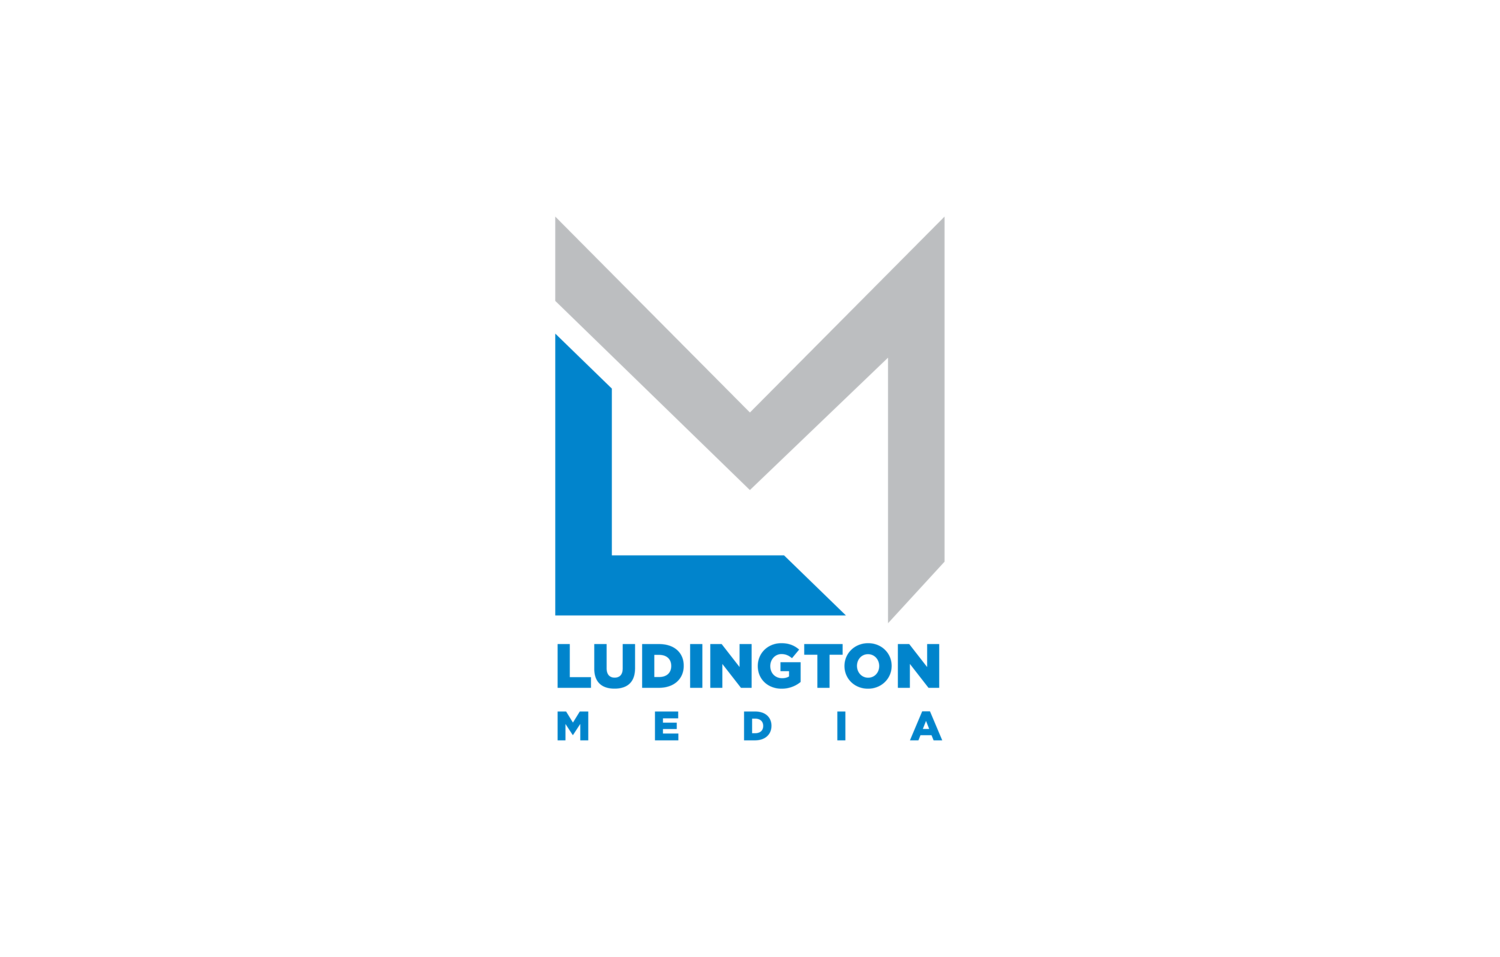 Ludington Media